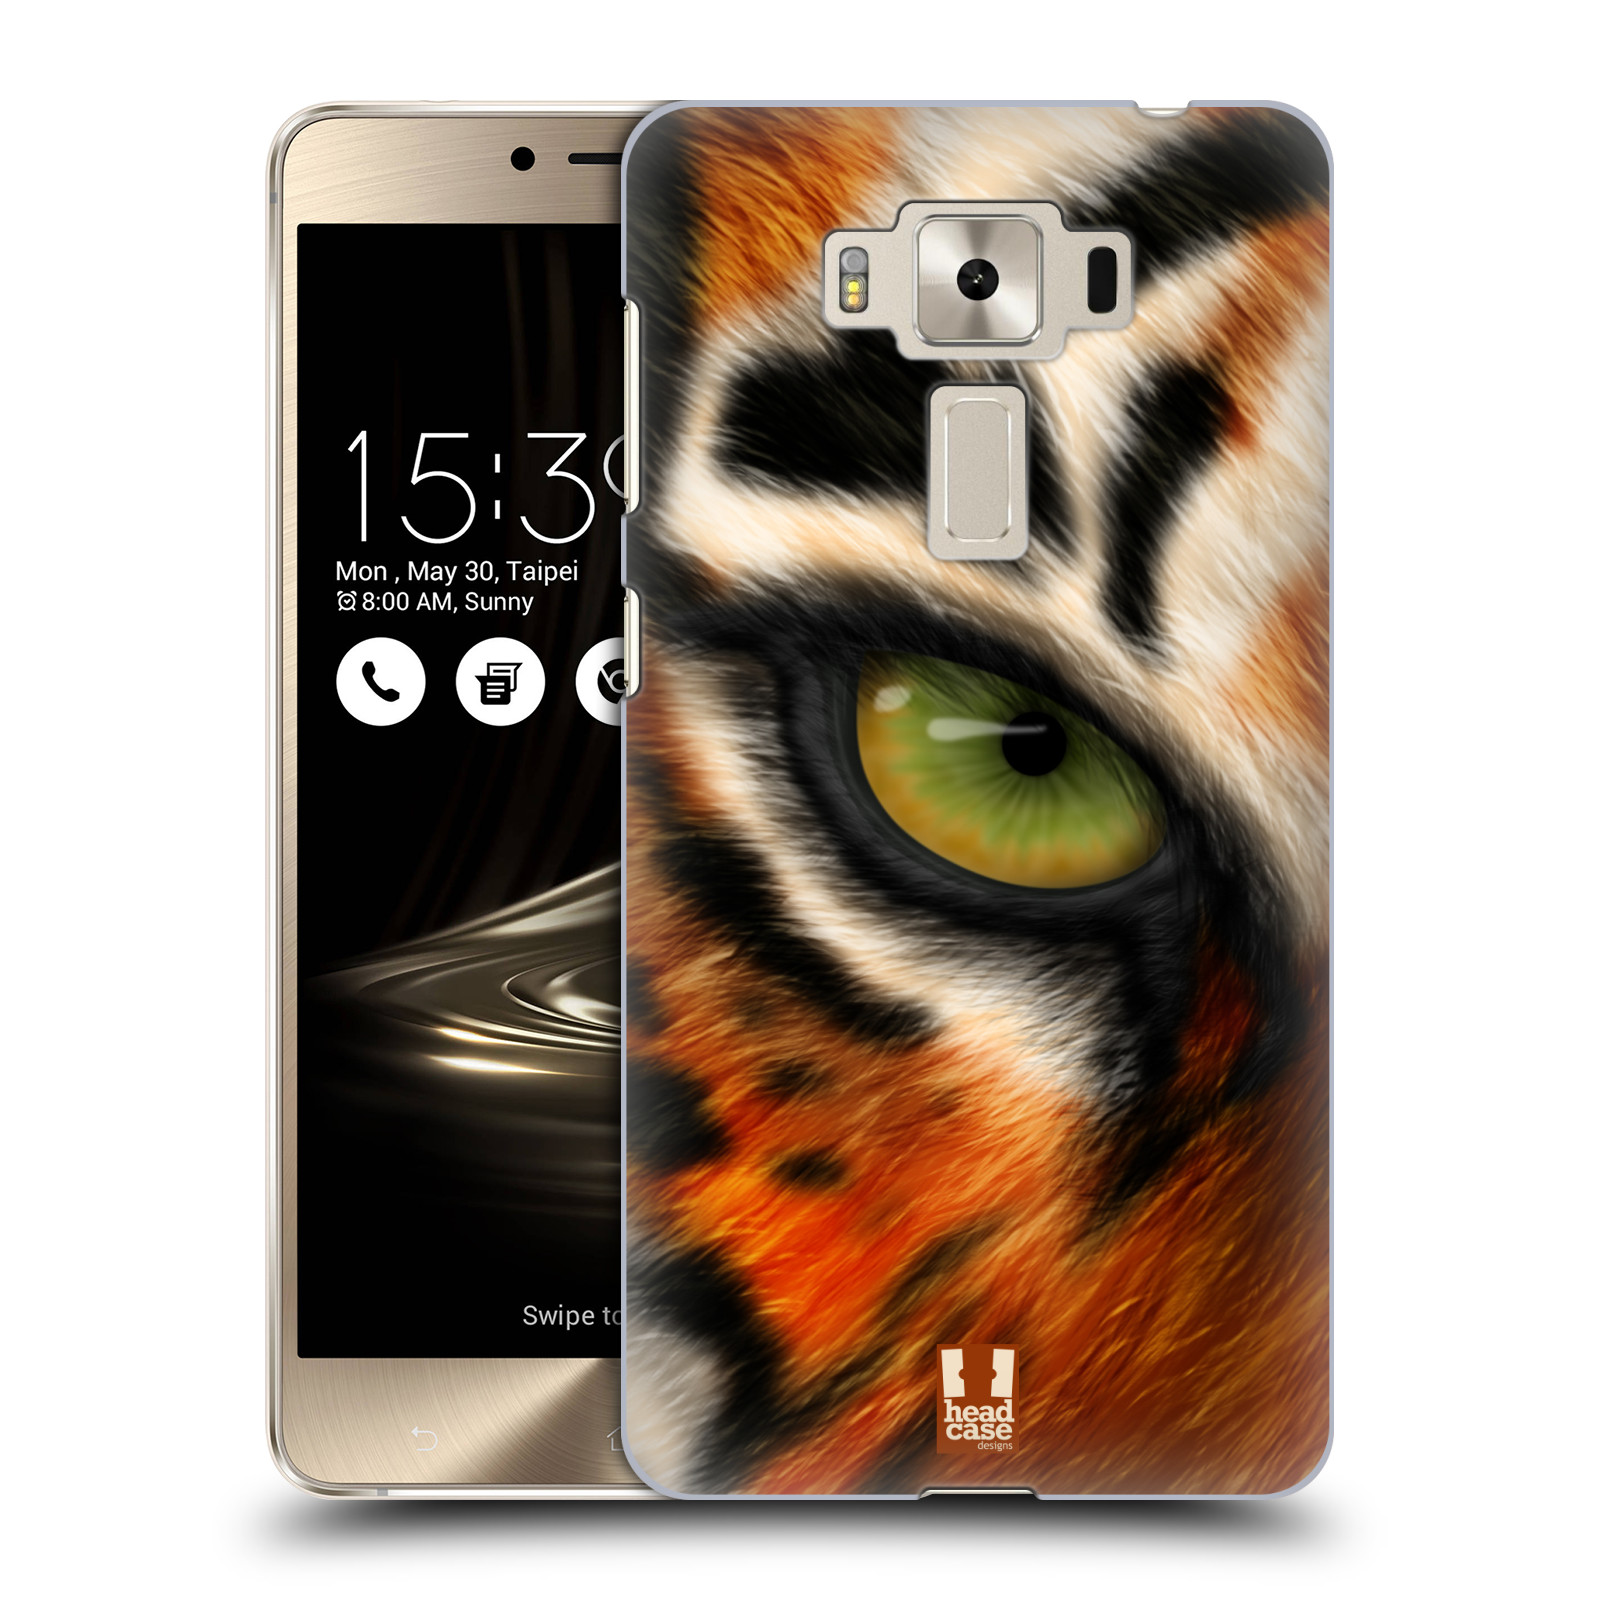 HEAD CASE plastový obal na mobil Asus Zenfone 3 DELUXE ZS550KL vzor pohled zvířete oko tygr